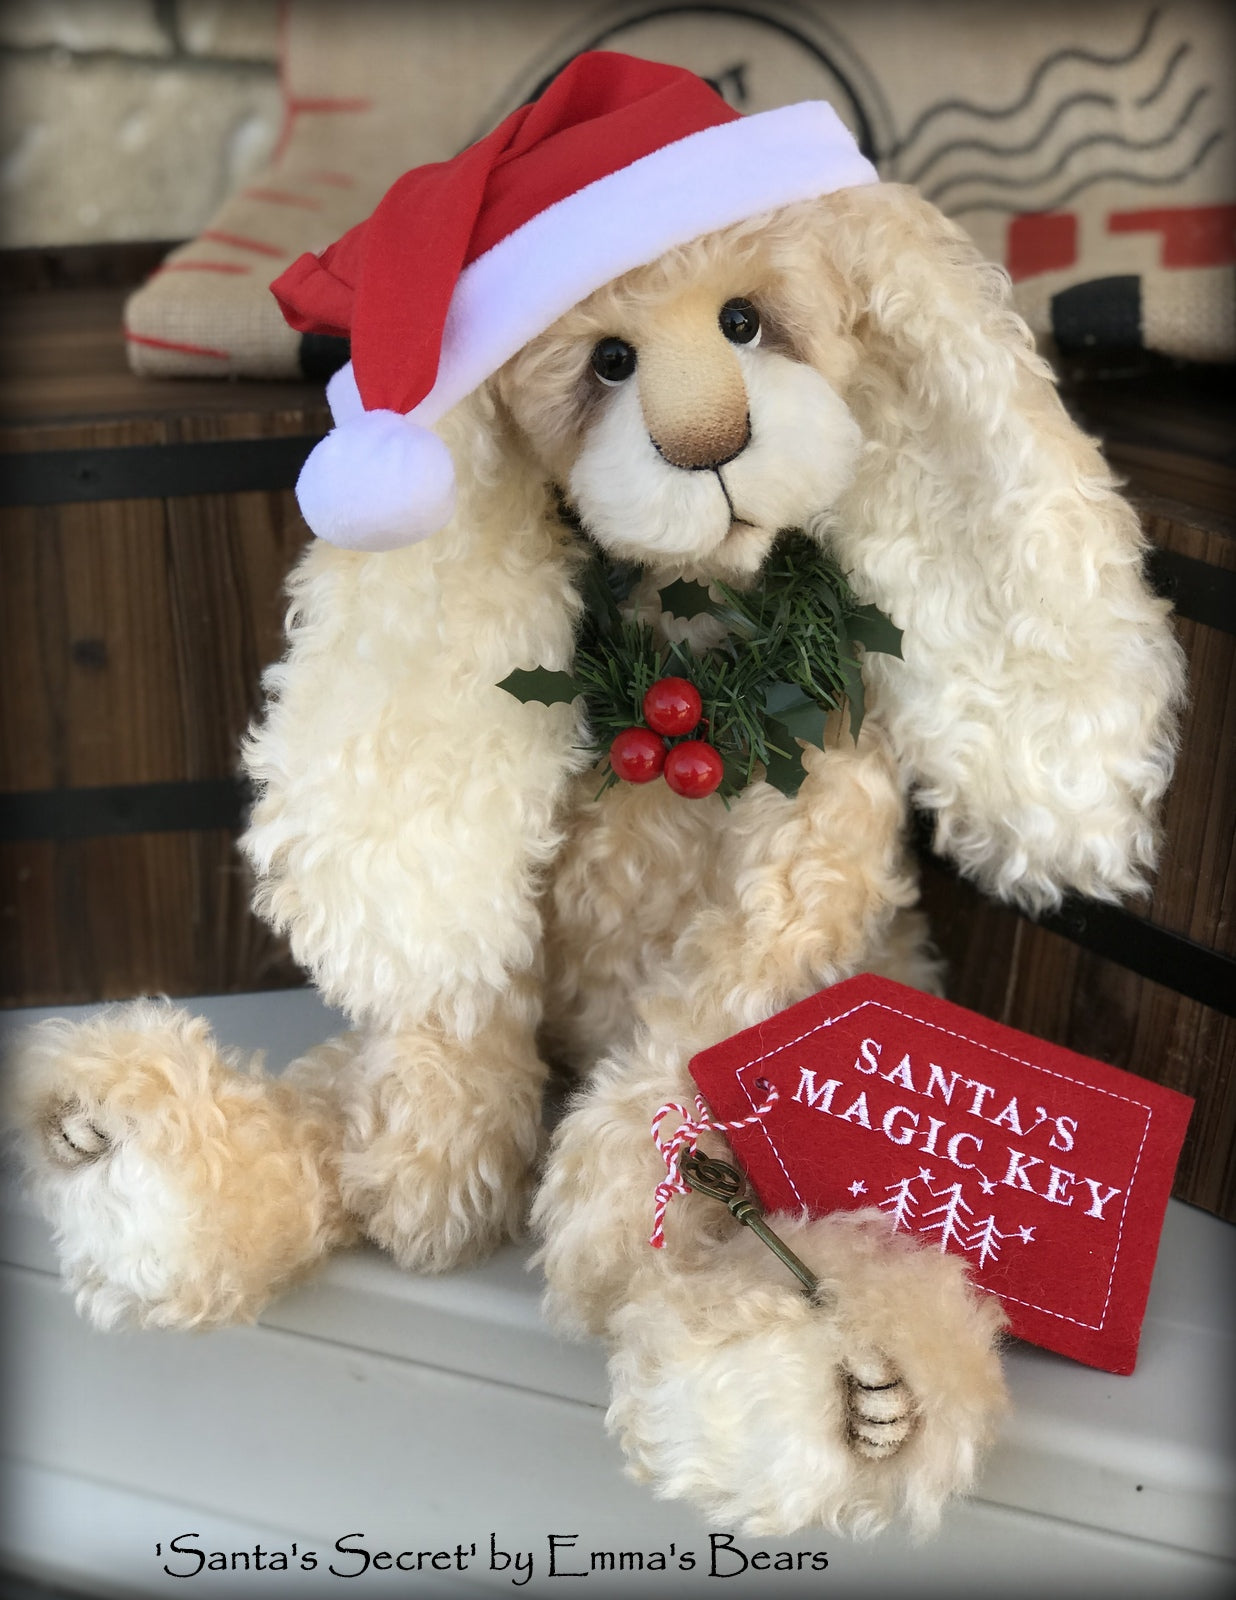 Santa's Secret - 18" lanky mohair Christmas Bunny by Emmas Bears - OOAK